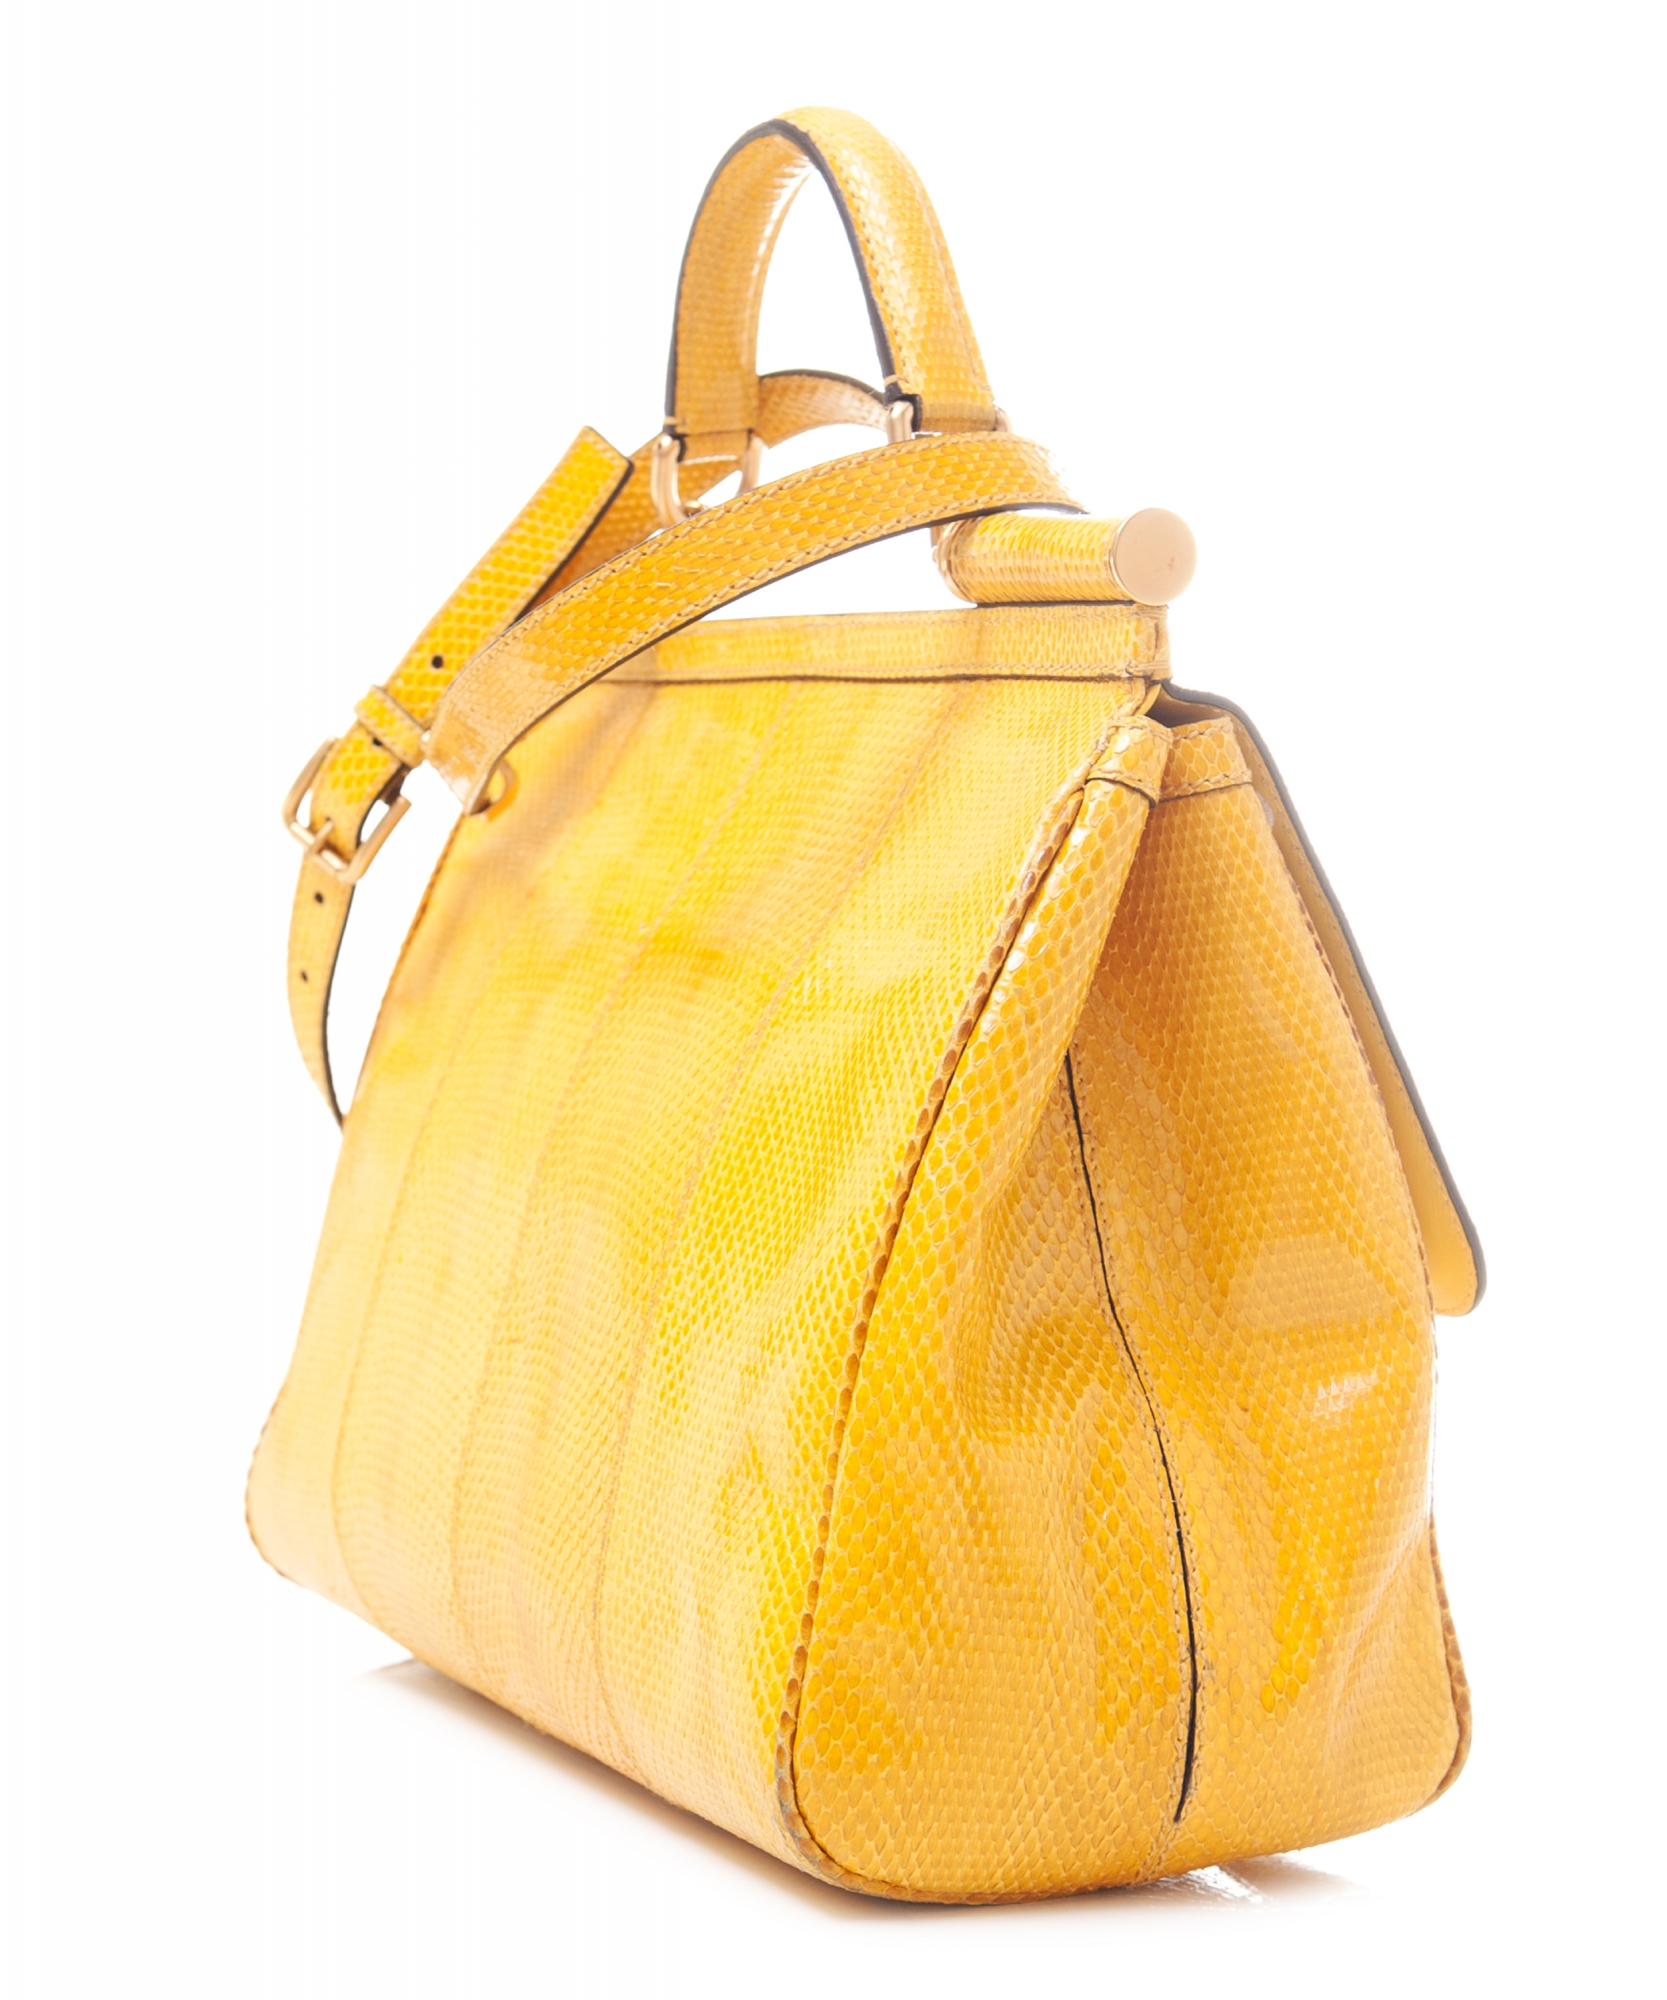 Large Sicily handbag in Yellow